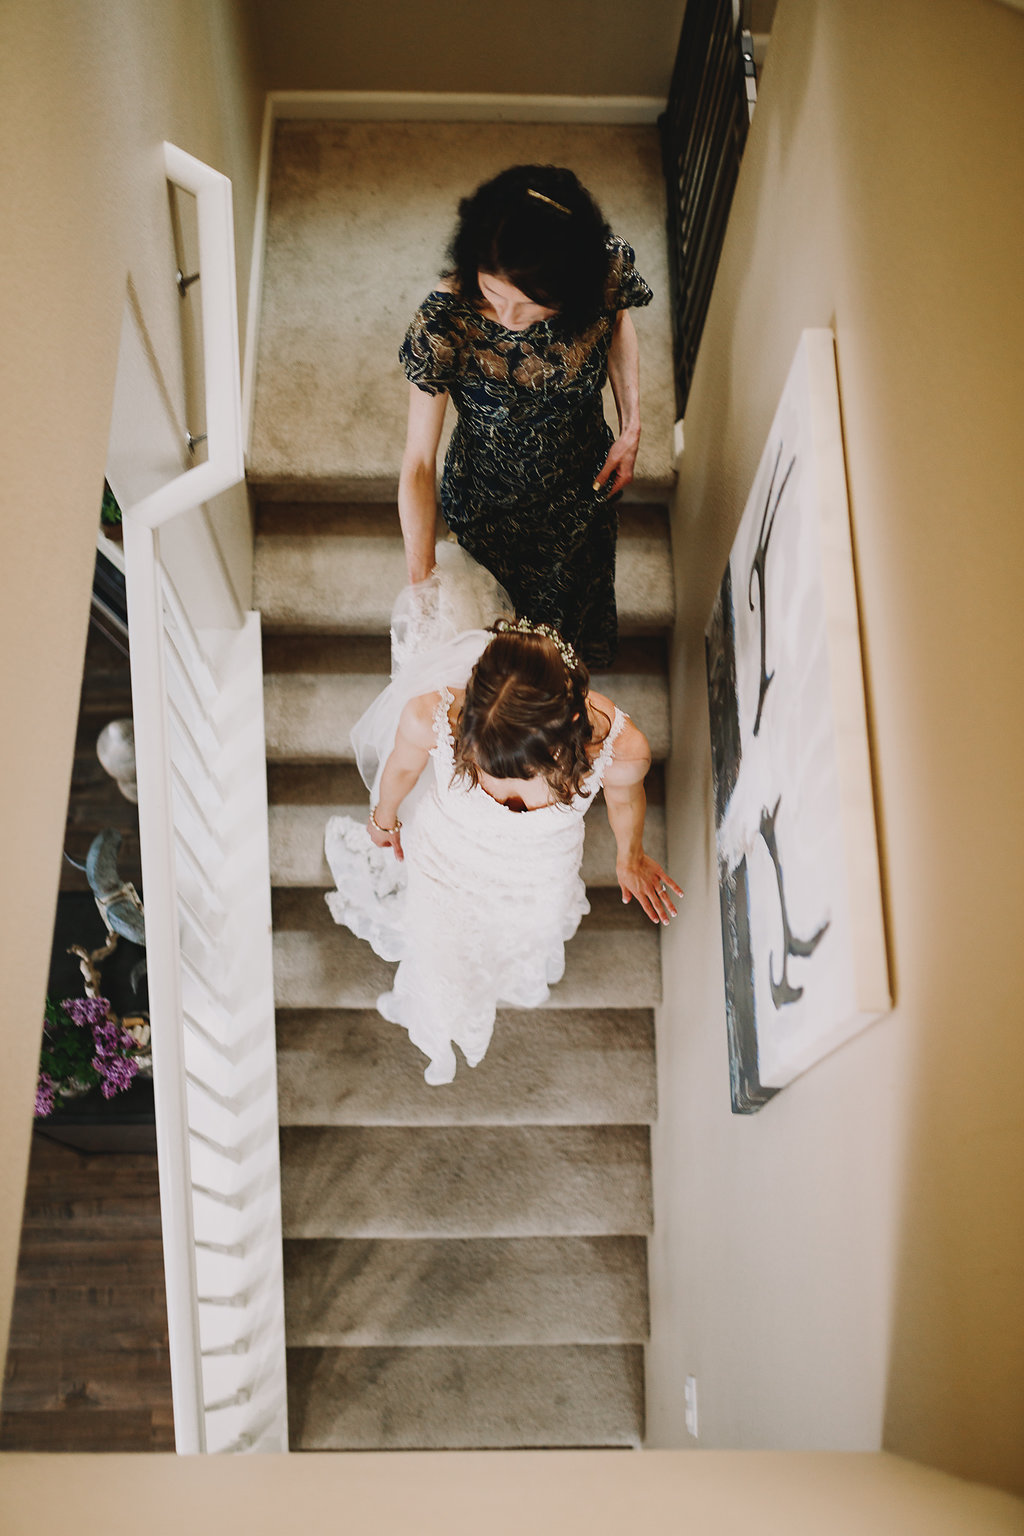 Gilroy Winery Wedding Venue Kirigin Cellars - The Overwhelmed Bride Wedding Blog